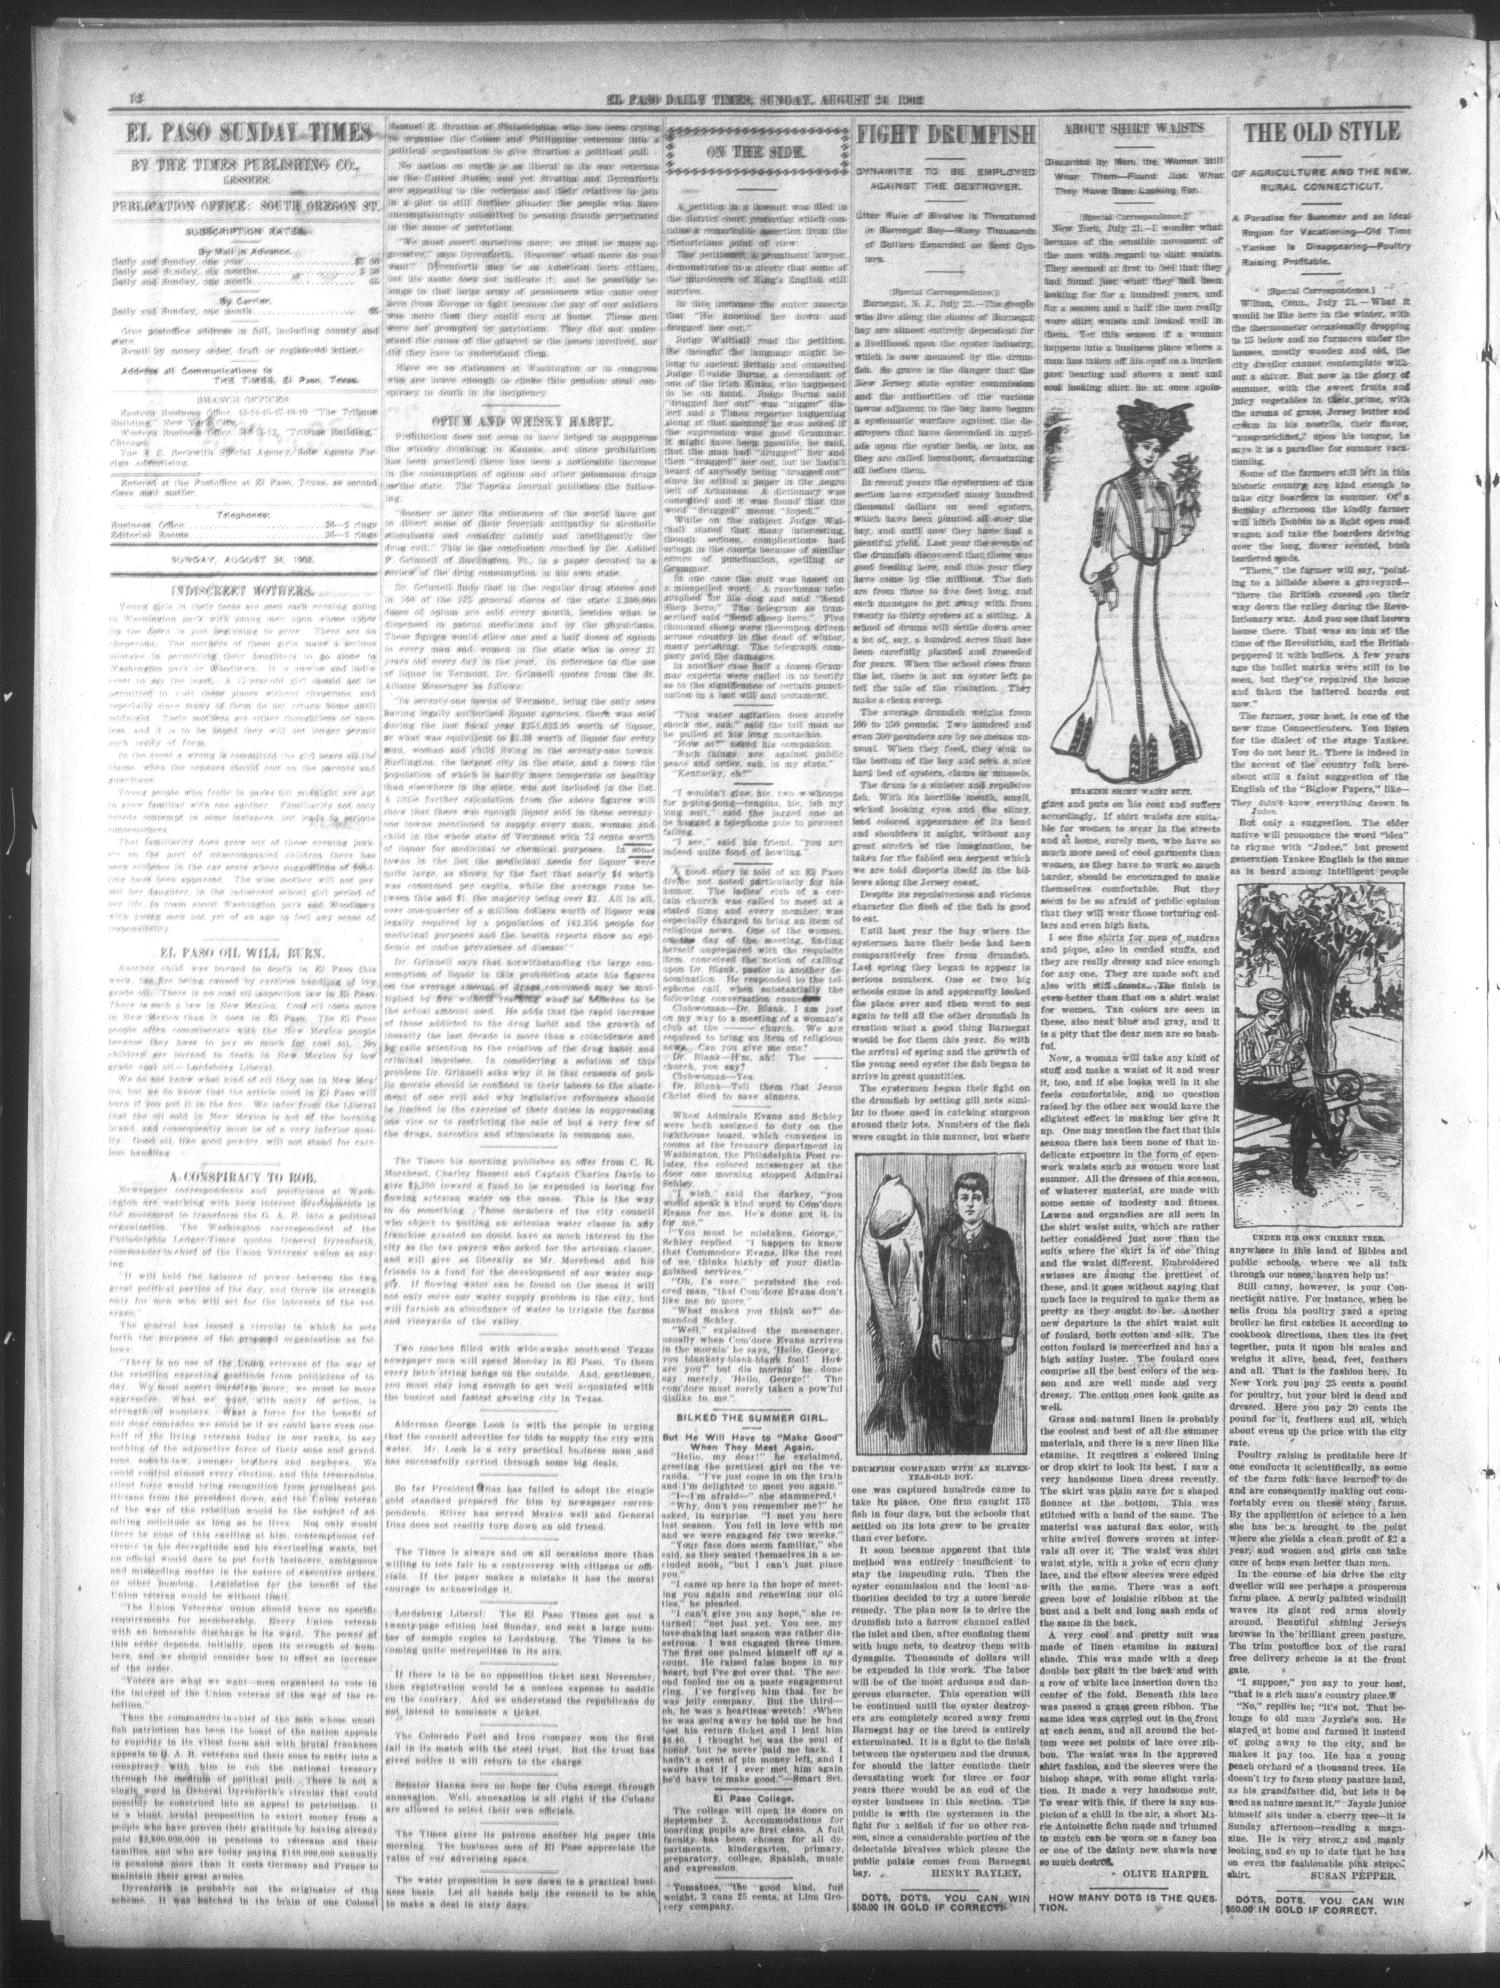 El Paso Sunday Times El Paso Tex Vol 22 Ed 1 Sunday August 24 1902 Page 12 Of The Portal To Texas History